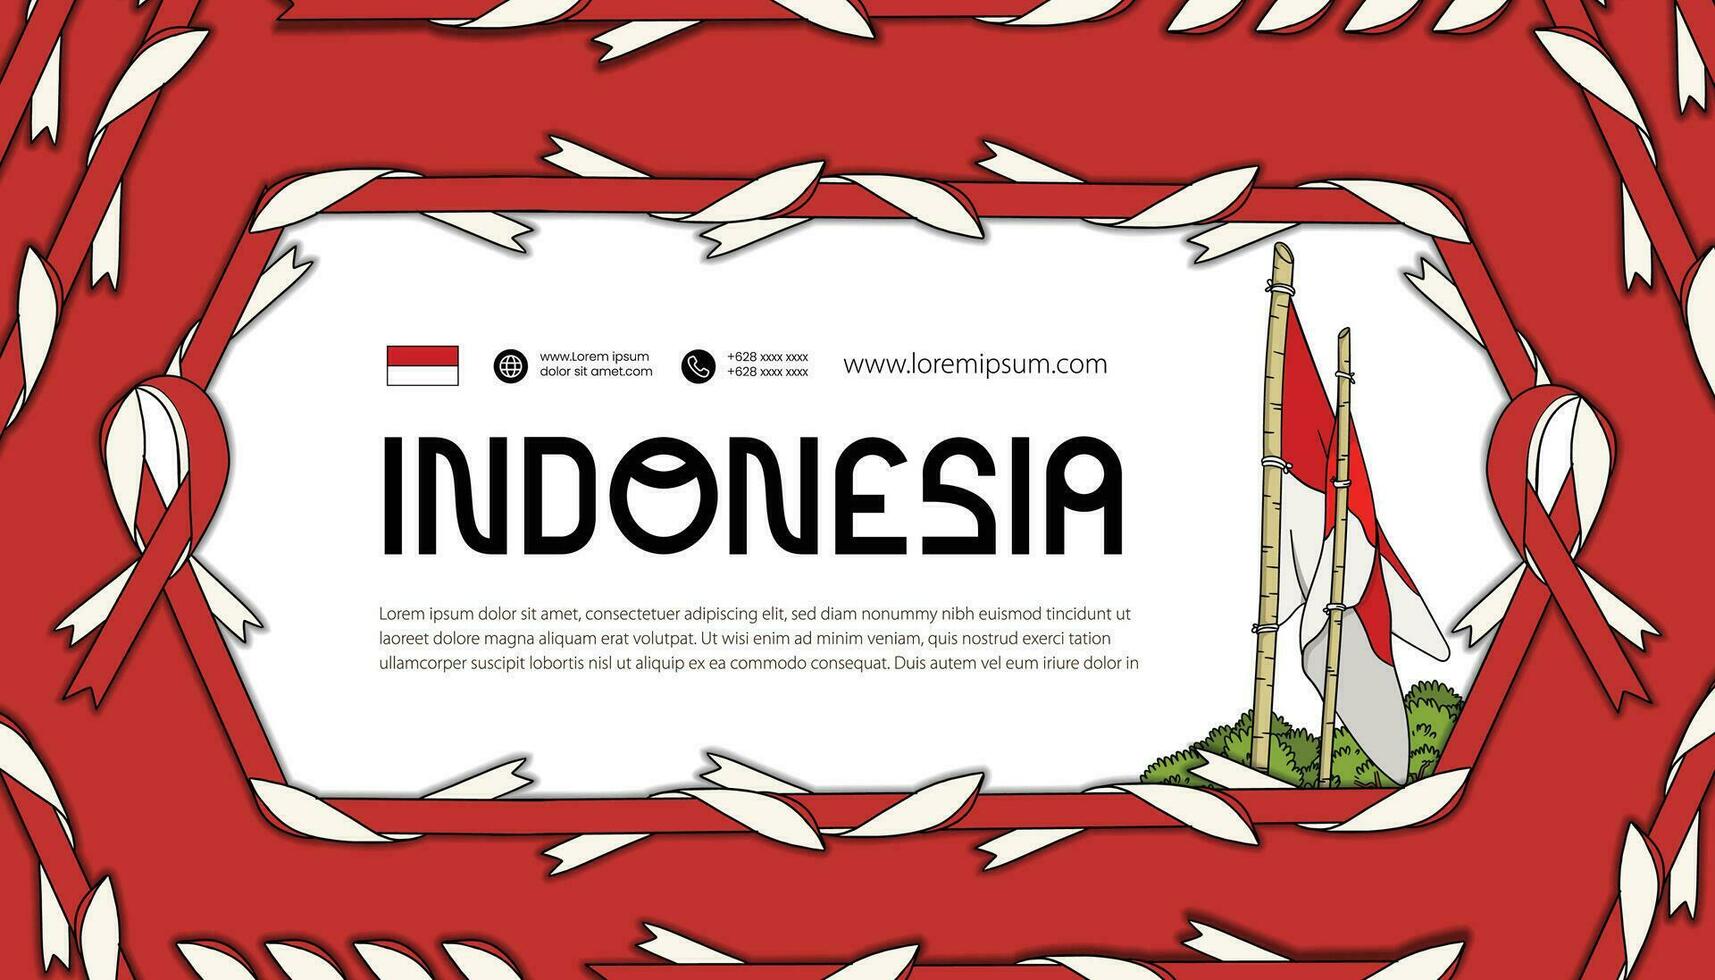 Selamat hari kemerdekaan Indonesia. translation happy indonesian independence day illustration landing page vector